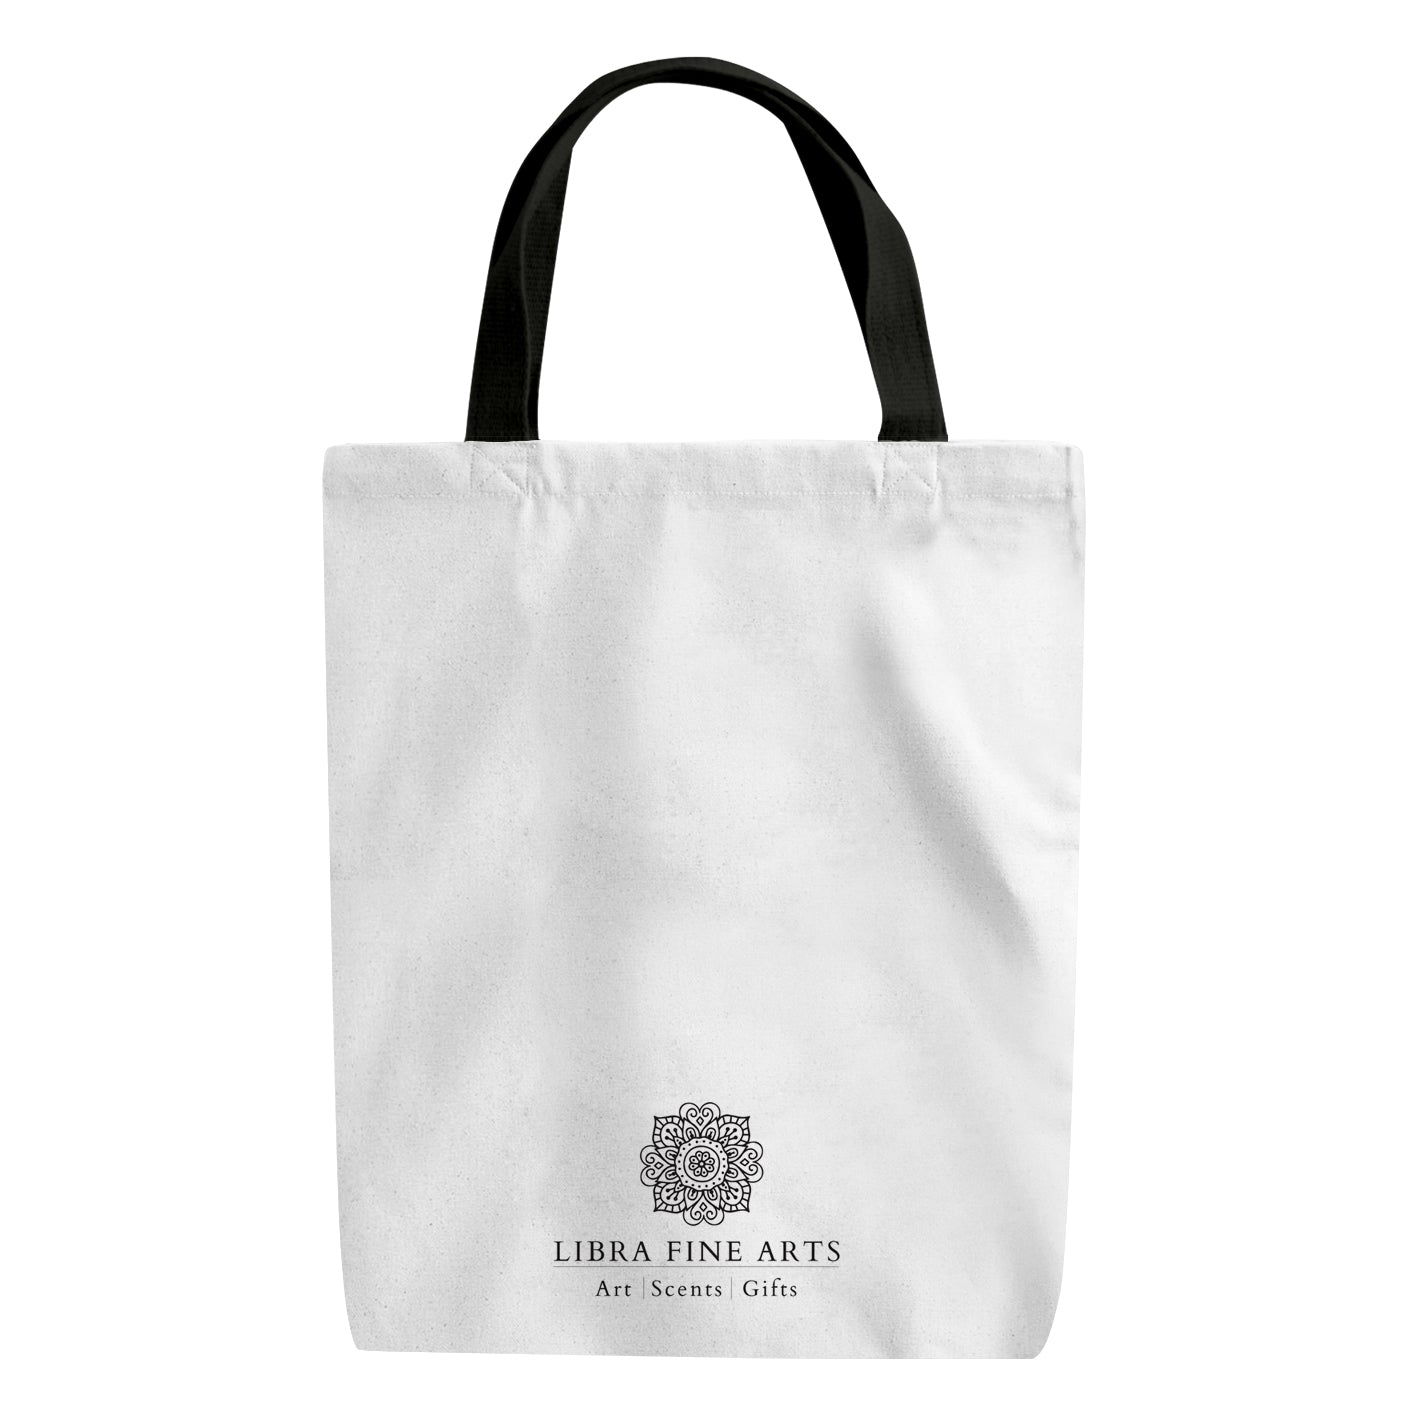 Zebra Shopper Bag From Libra Fine Arts